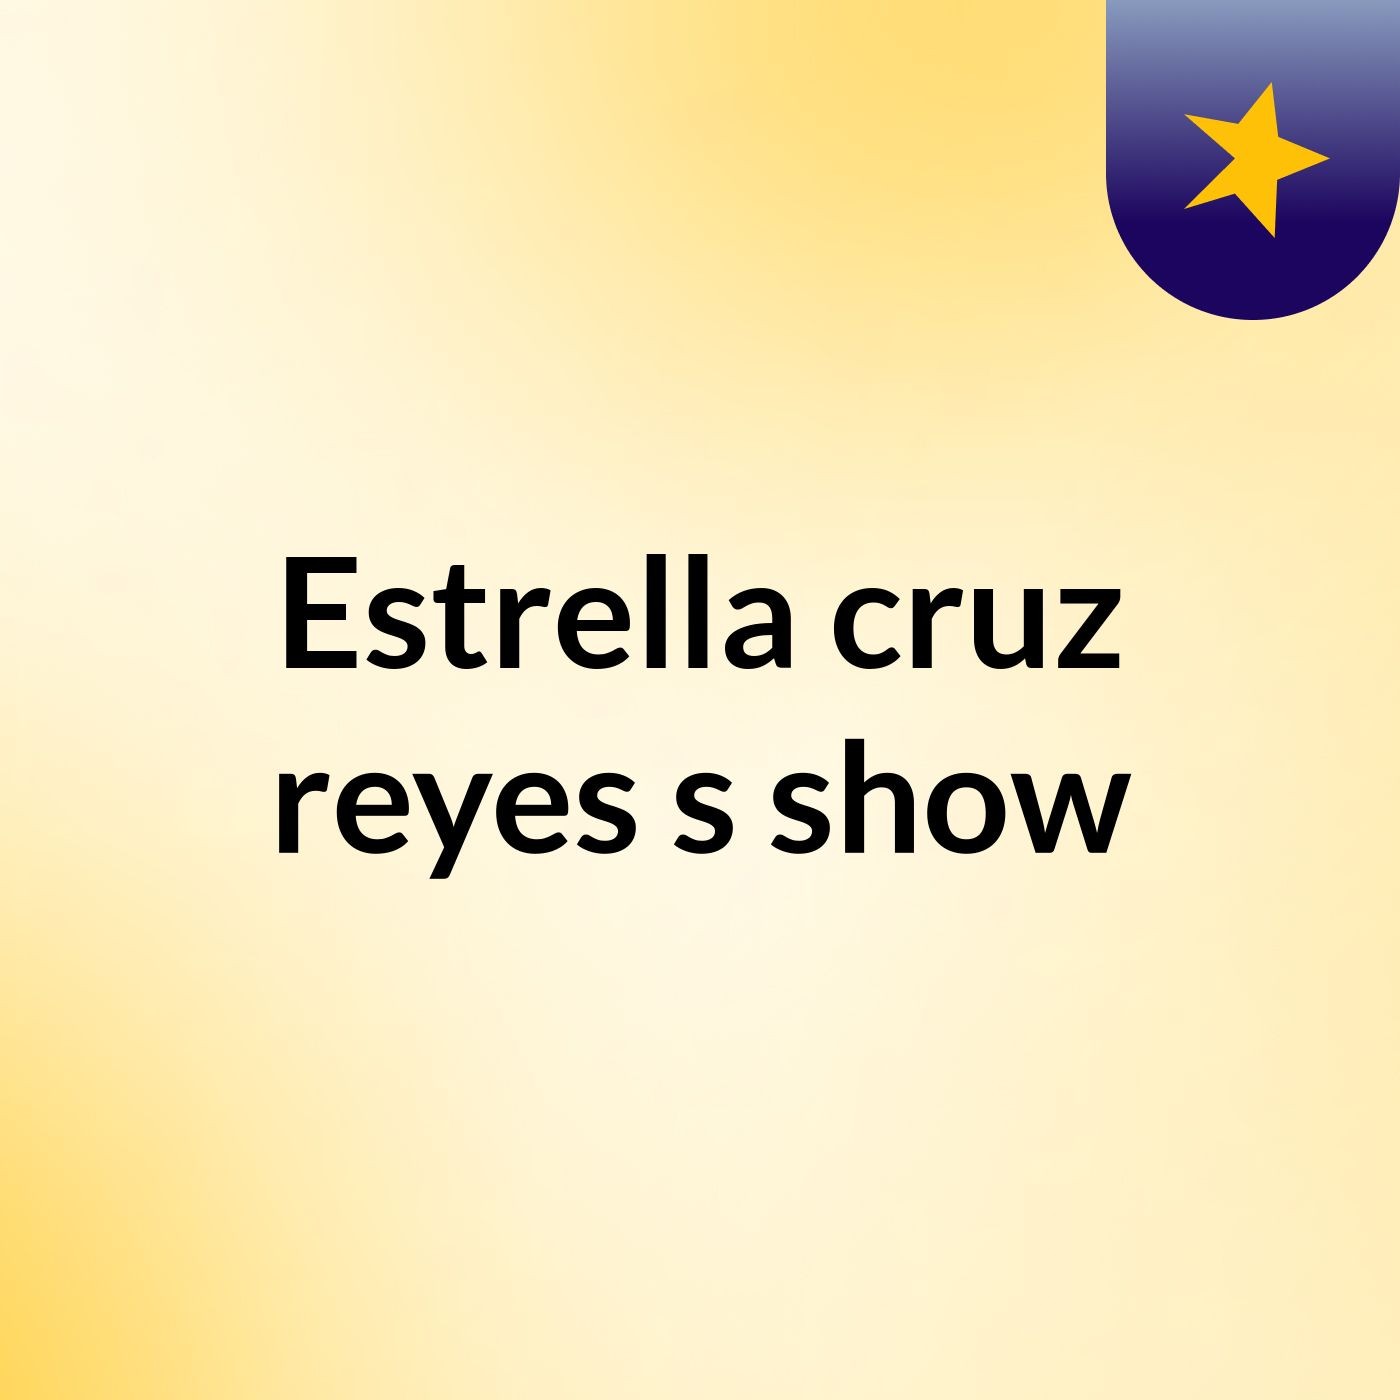 Estrella cruz reyes's show